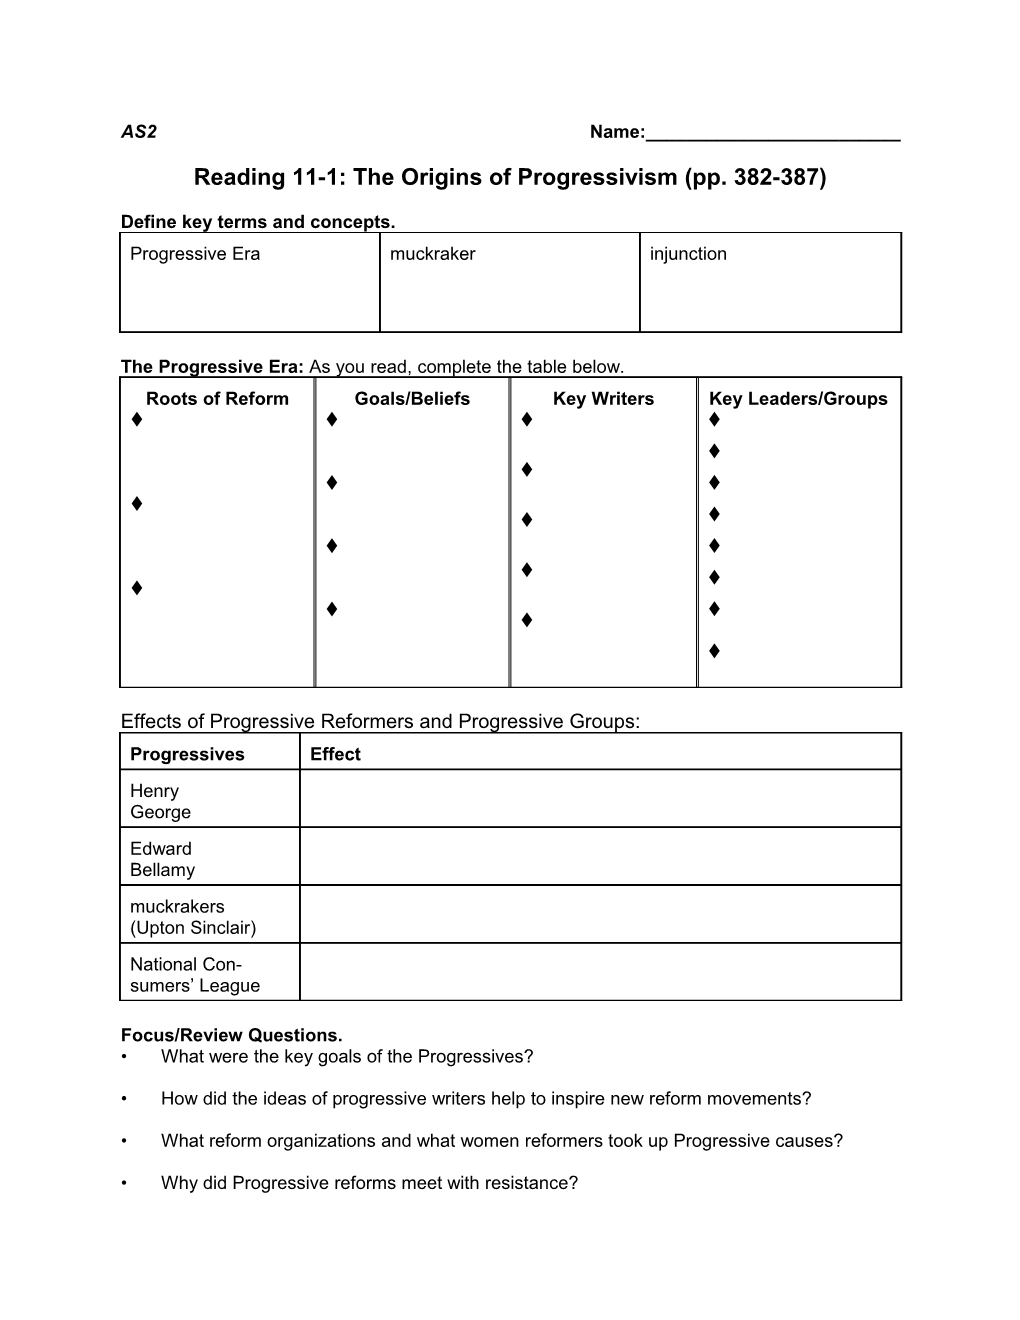 Reading 11-1: the Origins of Progressivism (Pp. 382-387)